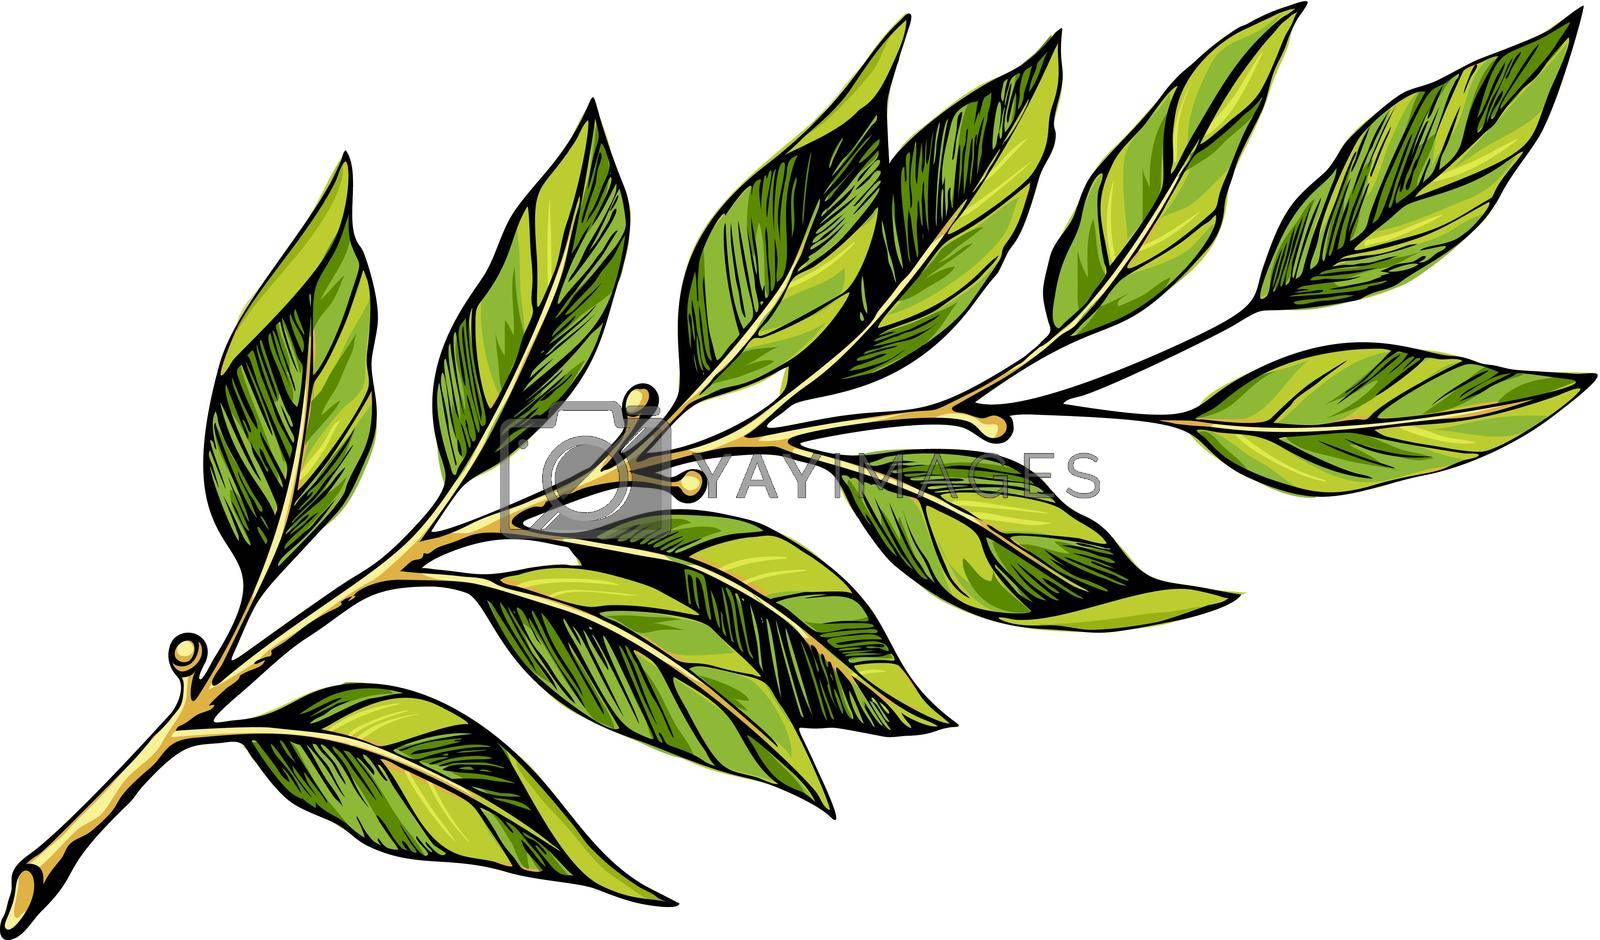 Royalty free image of Laurel branch color sketch by roman79